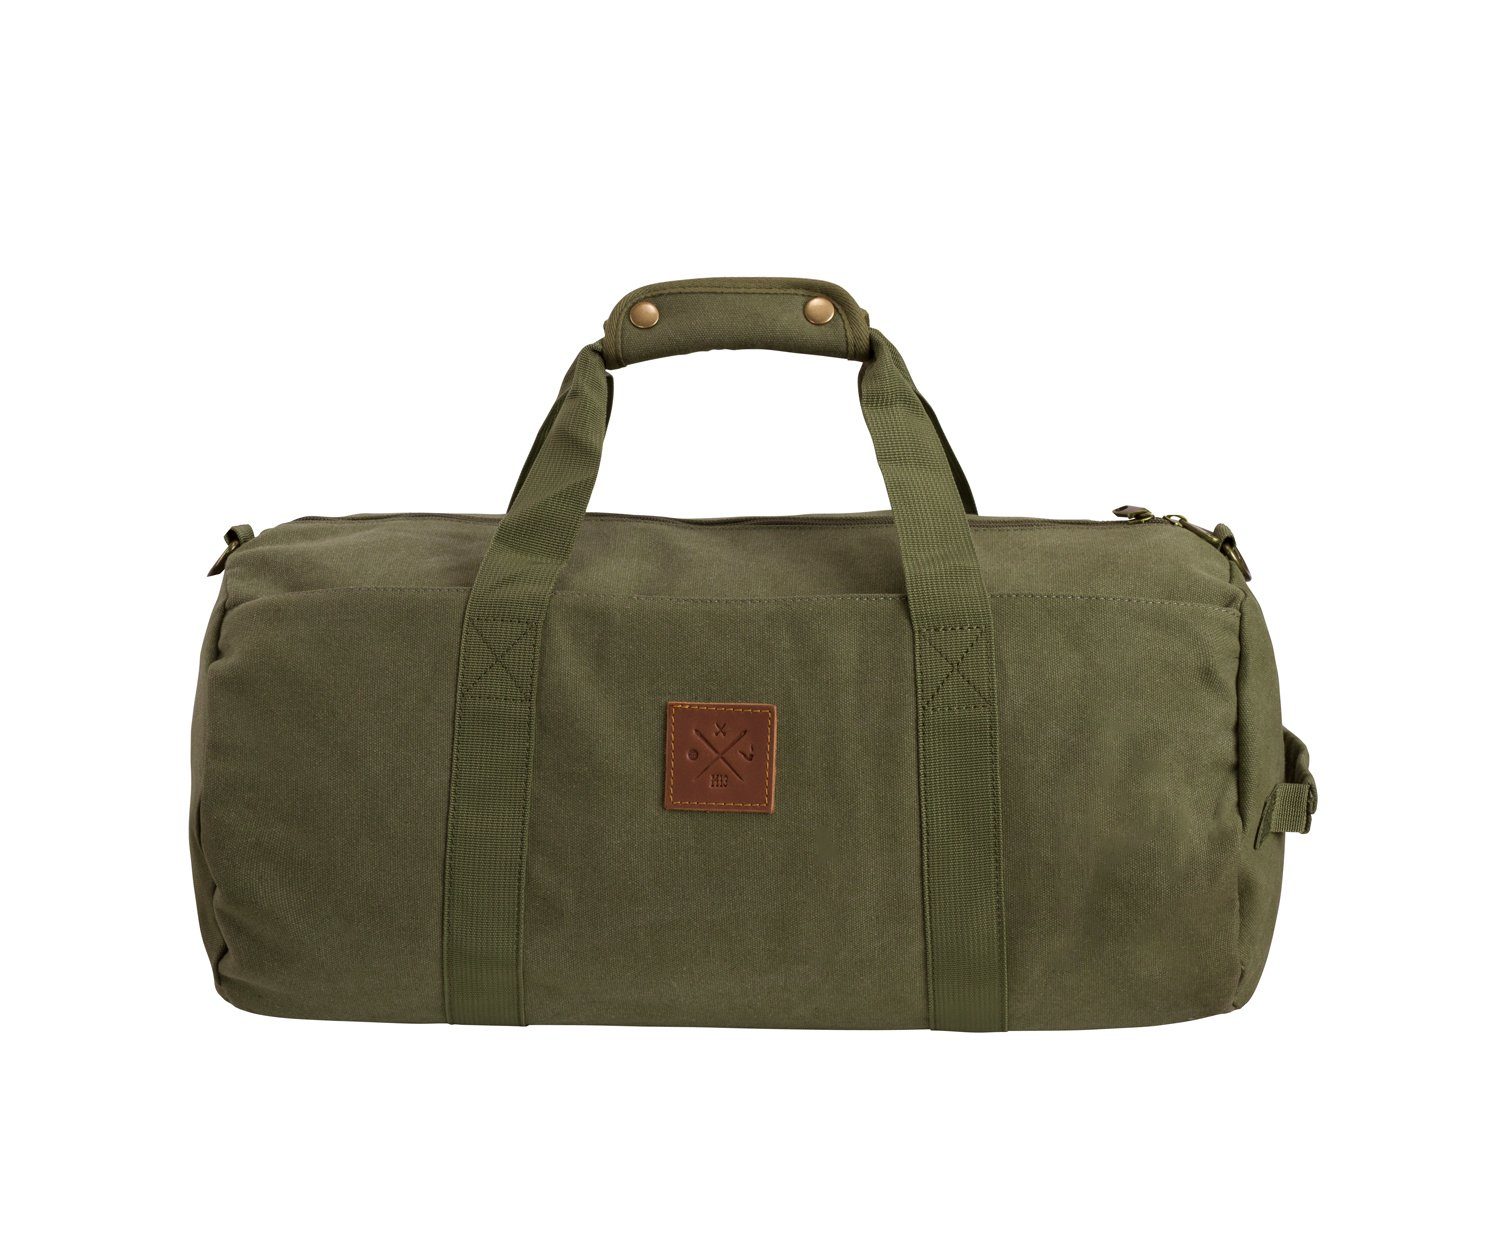 Barrel 24L Canvas Duffel Bag, Sporttasche Bag Olive/Khaki Fassungsvermögen - Sporttasche, Manufaktur13